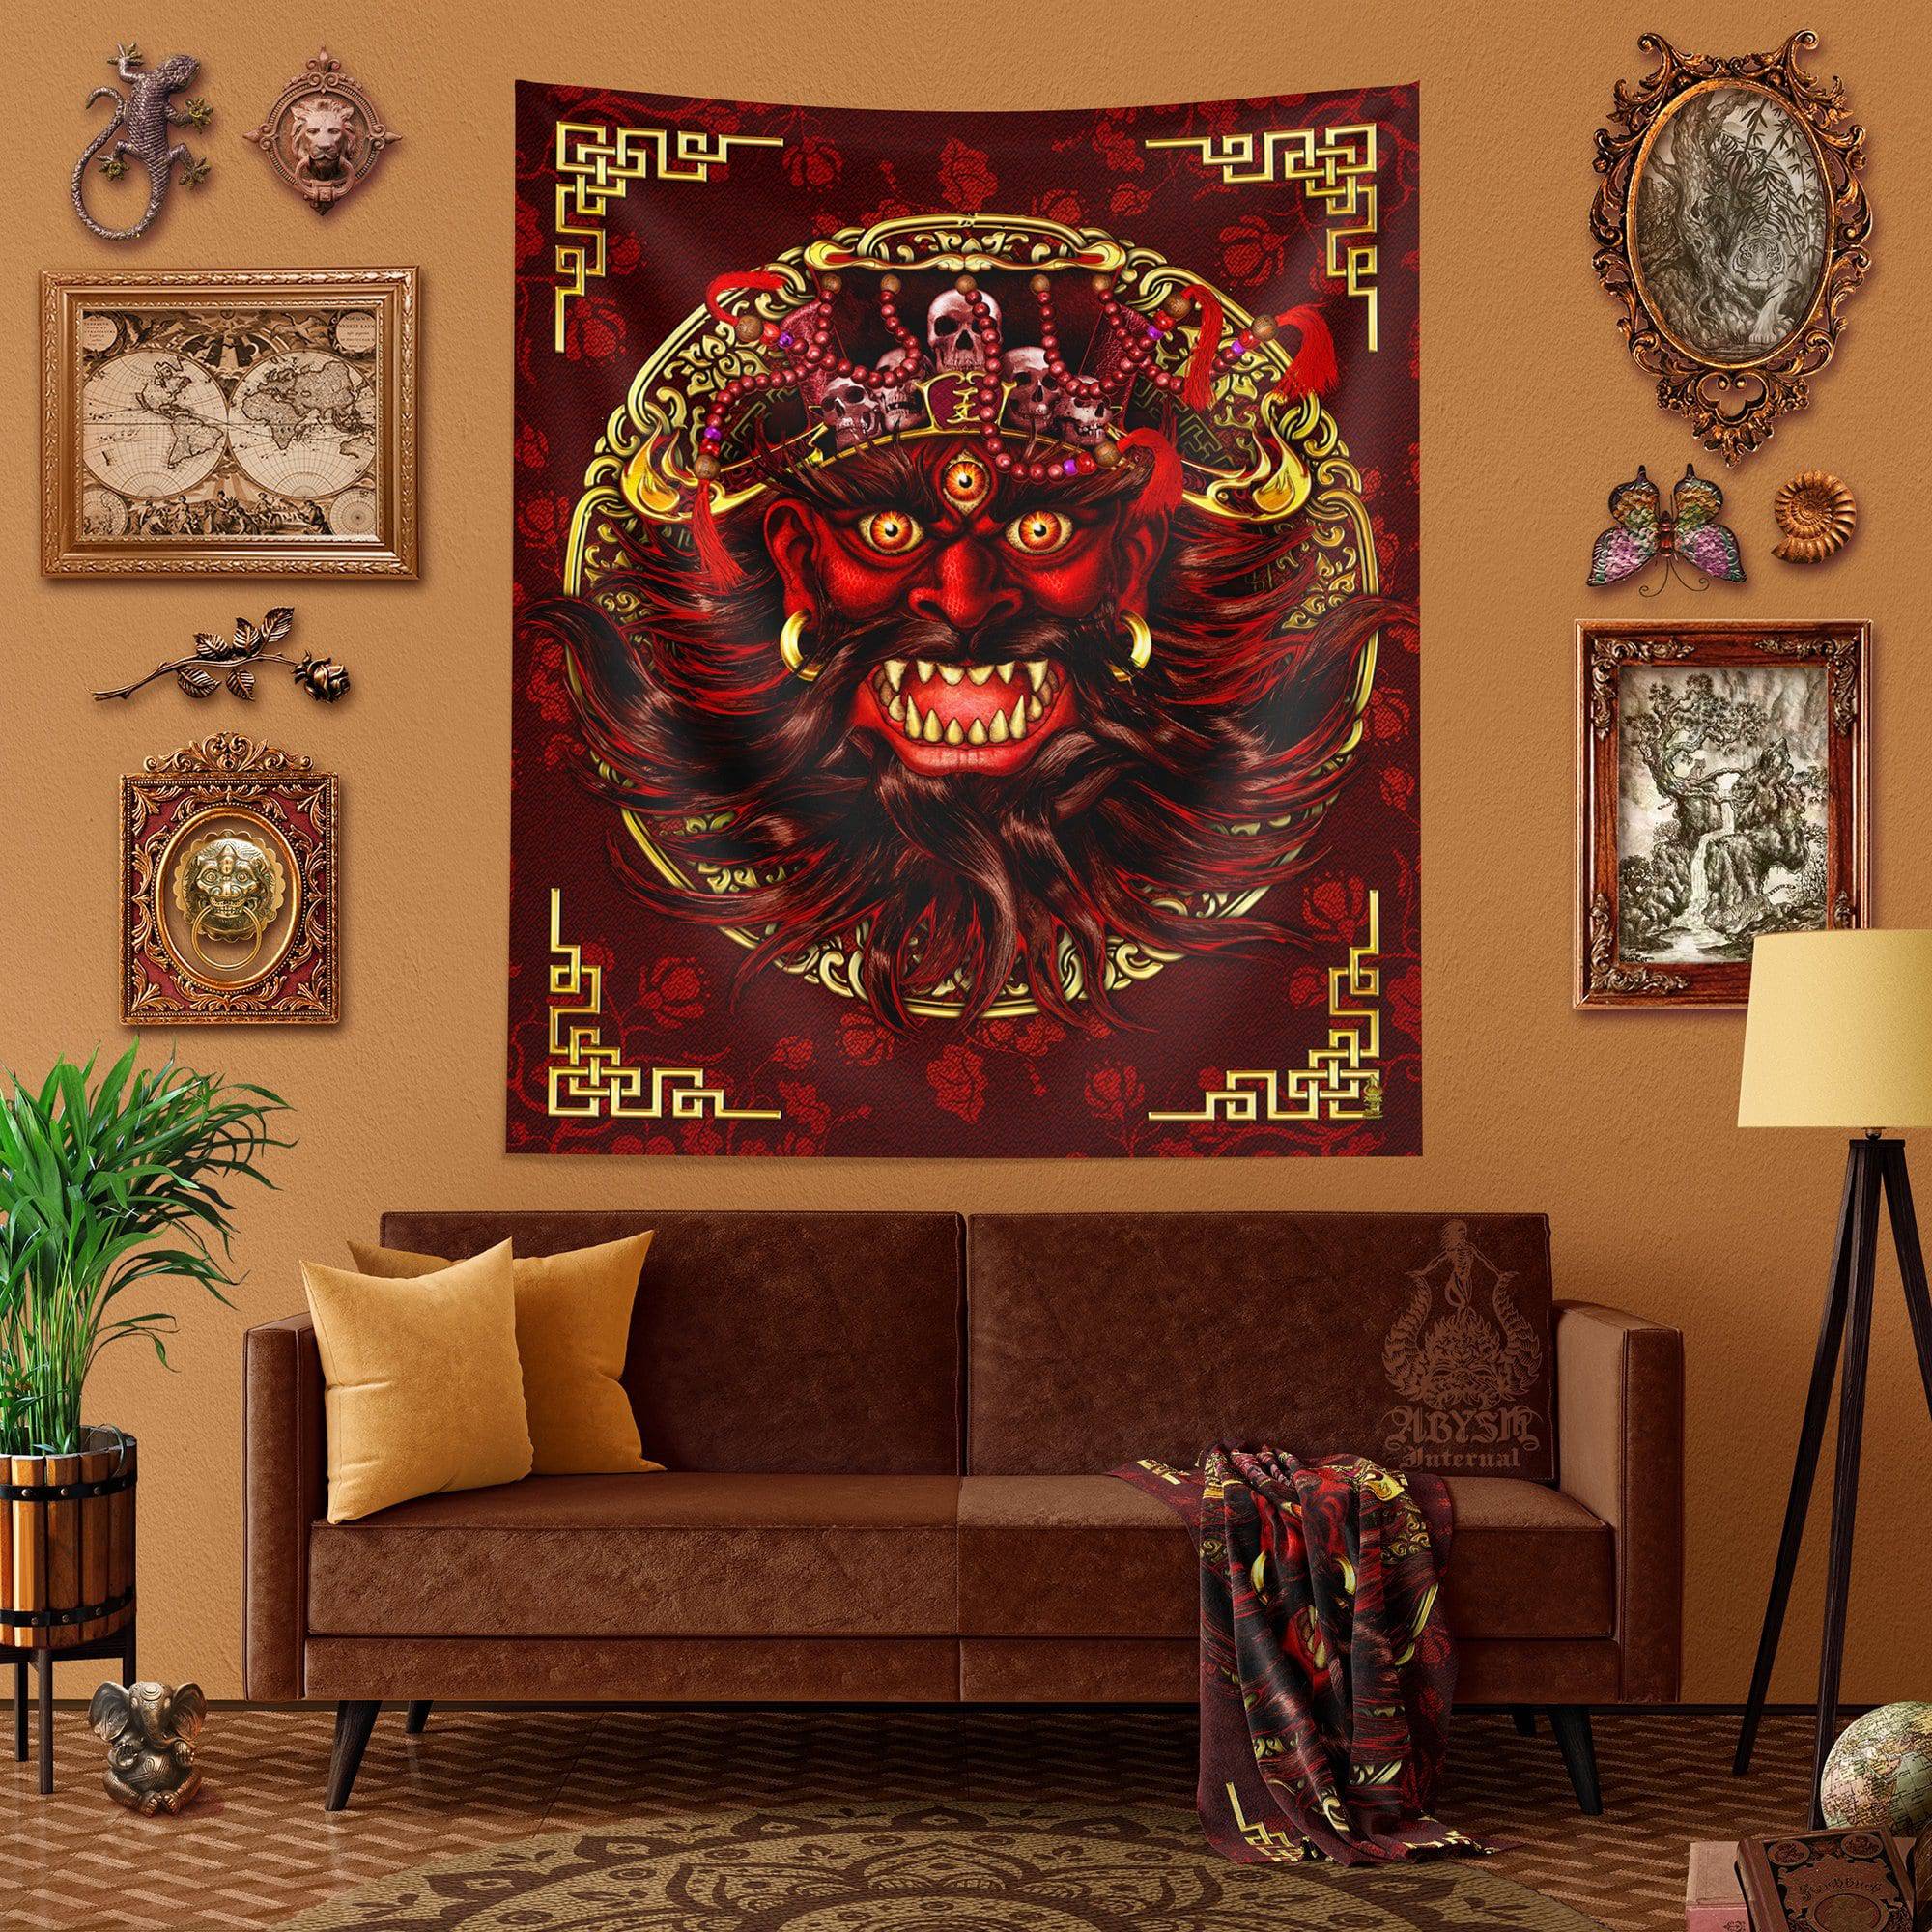 Yama Tapestry, Chinese Demon Art Print, Fantasy Decor - Abysm Internal